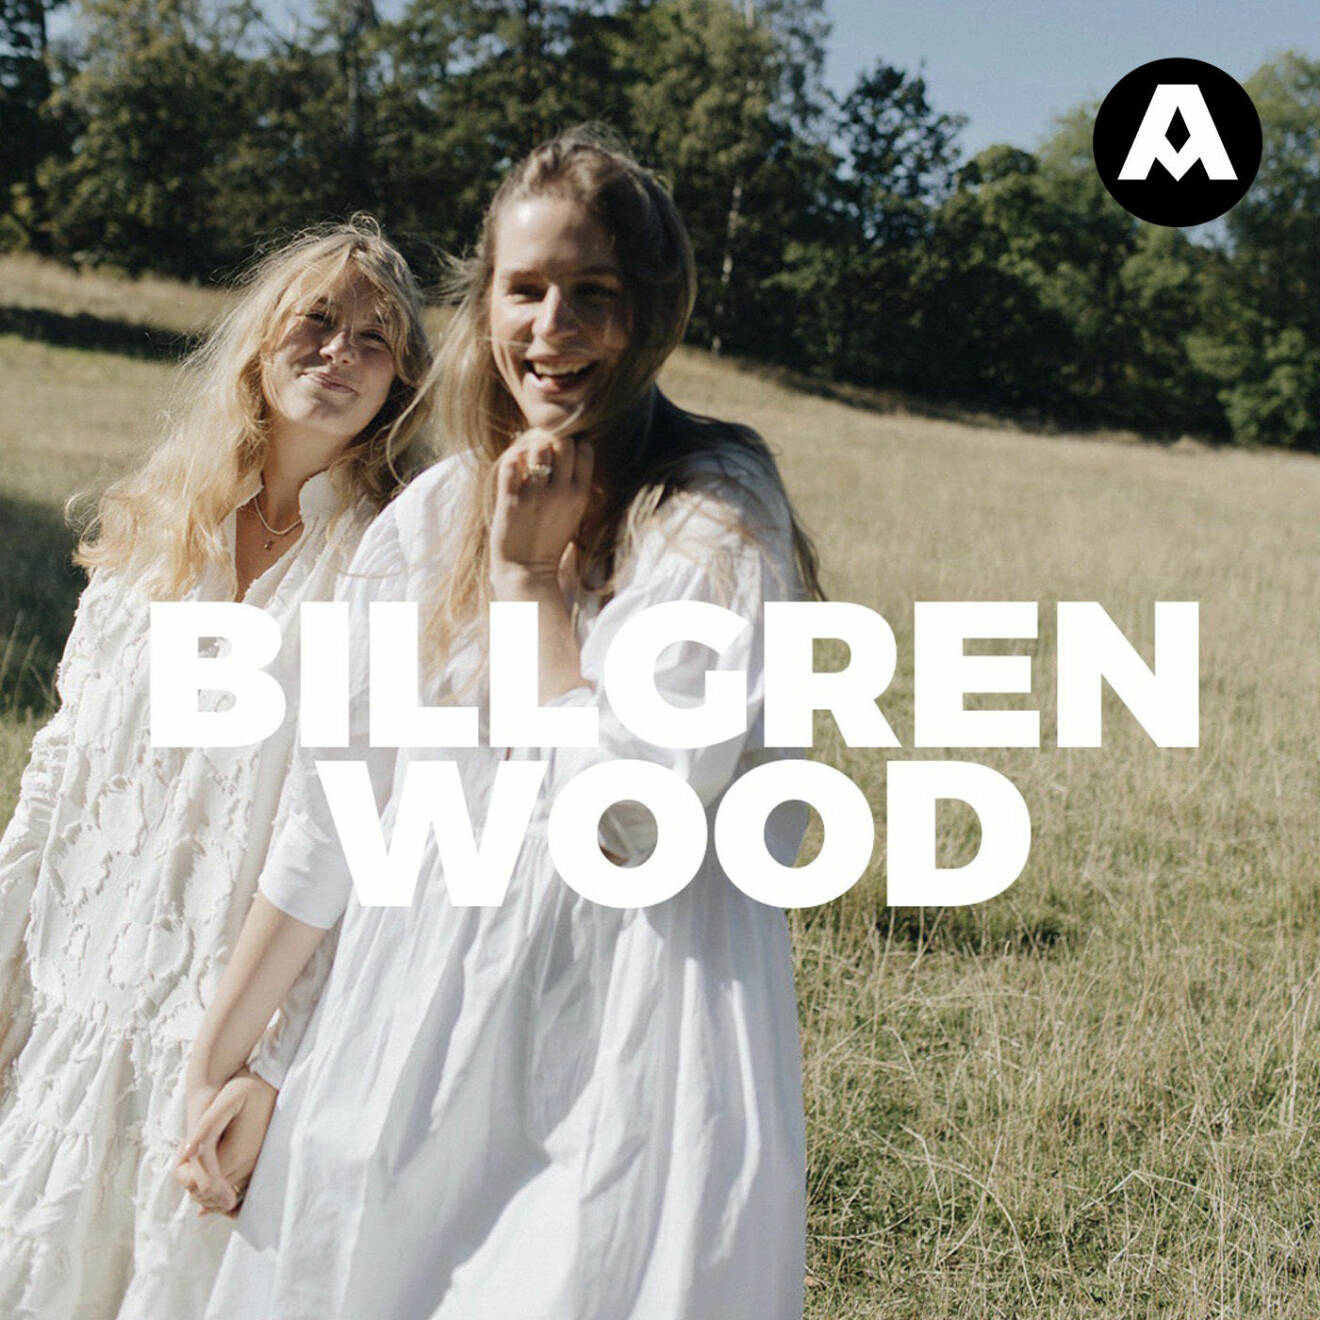 Podden Billgren Wood